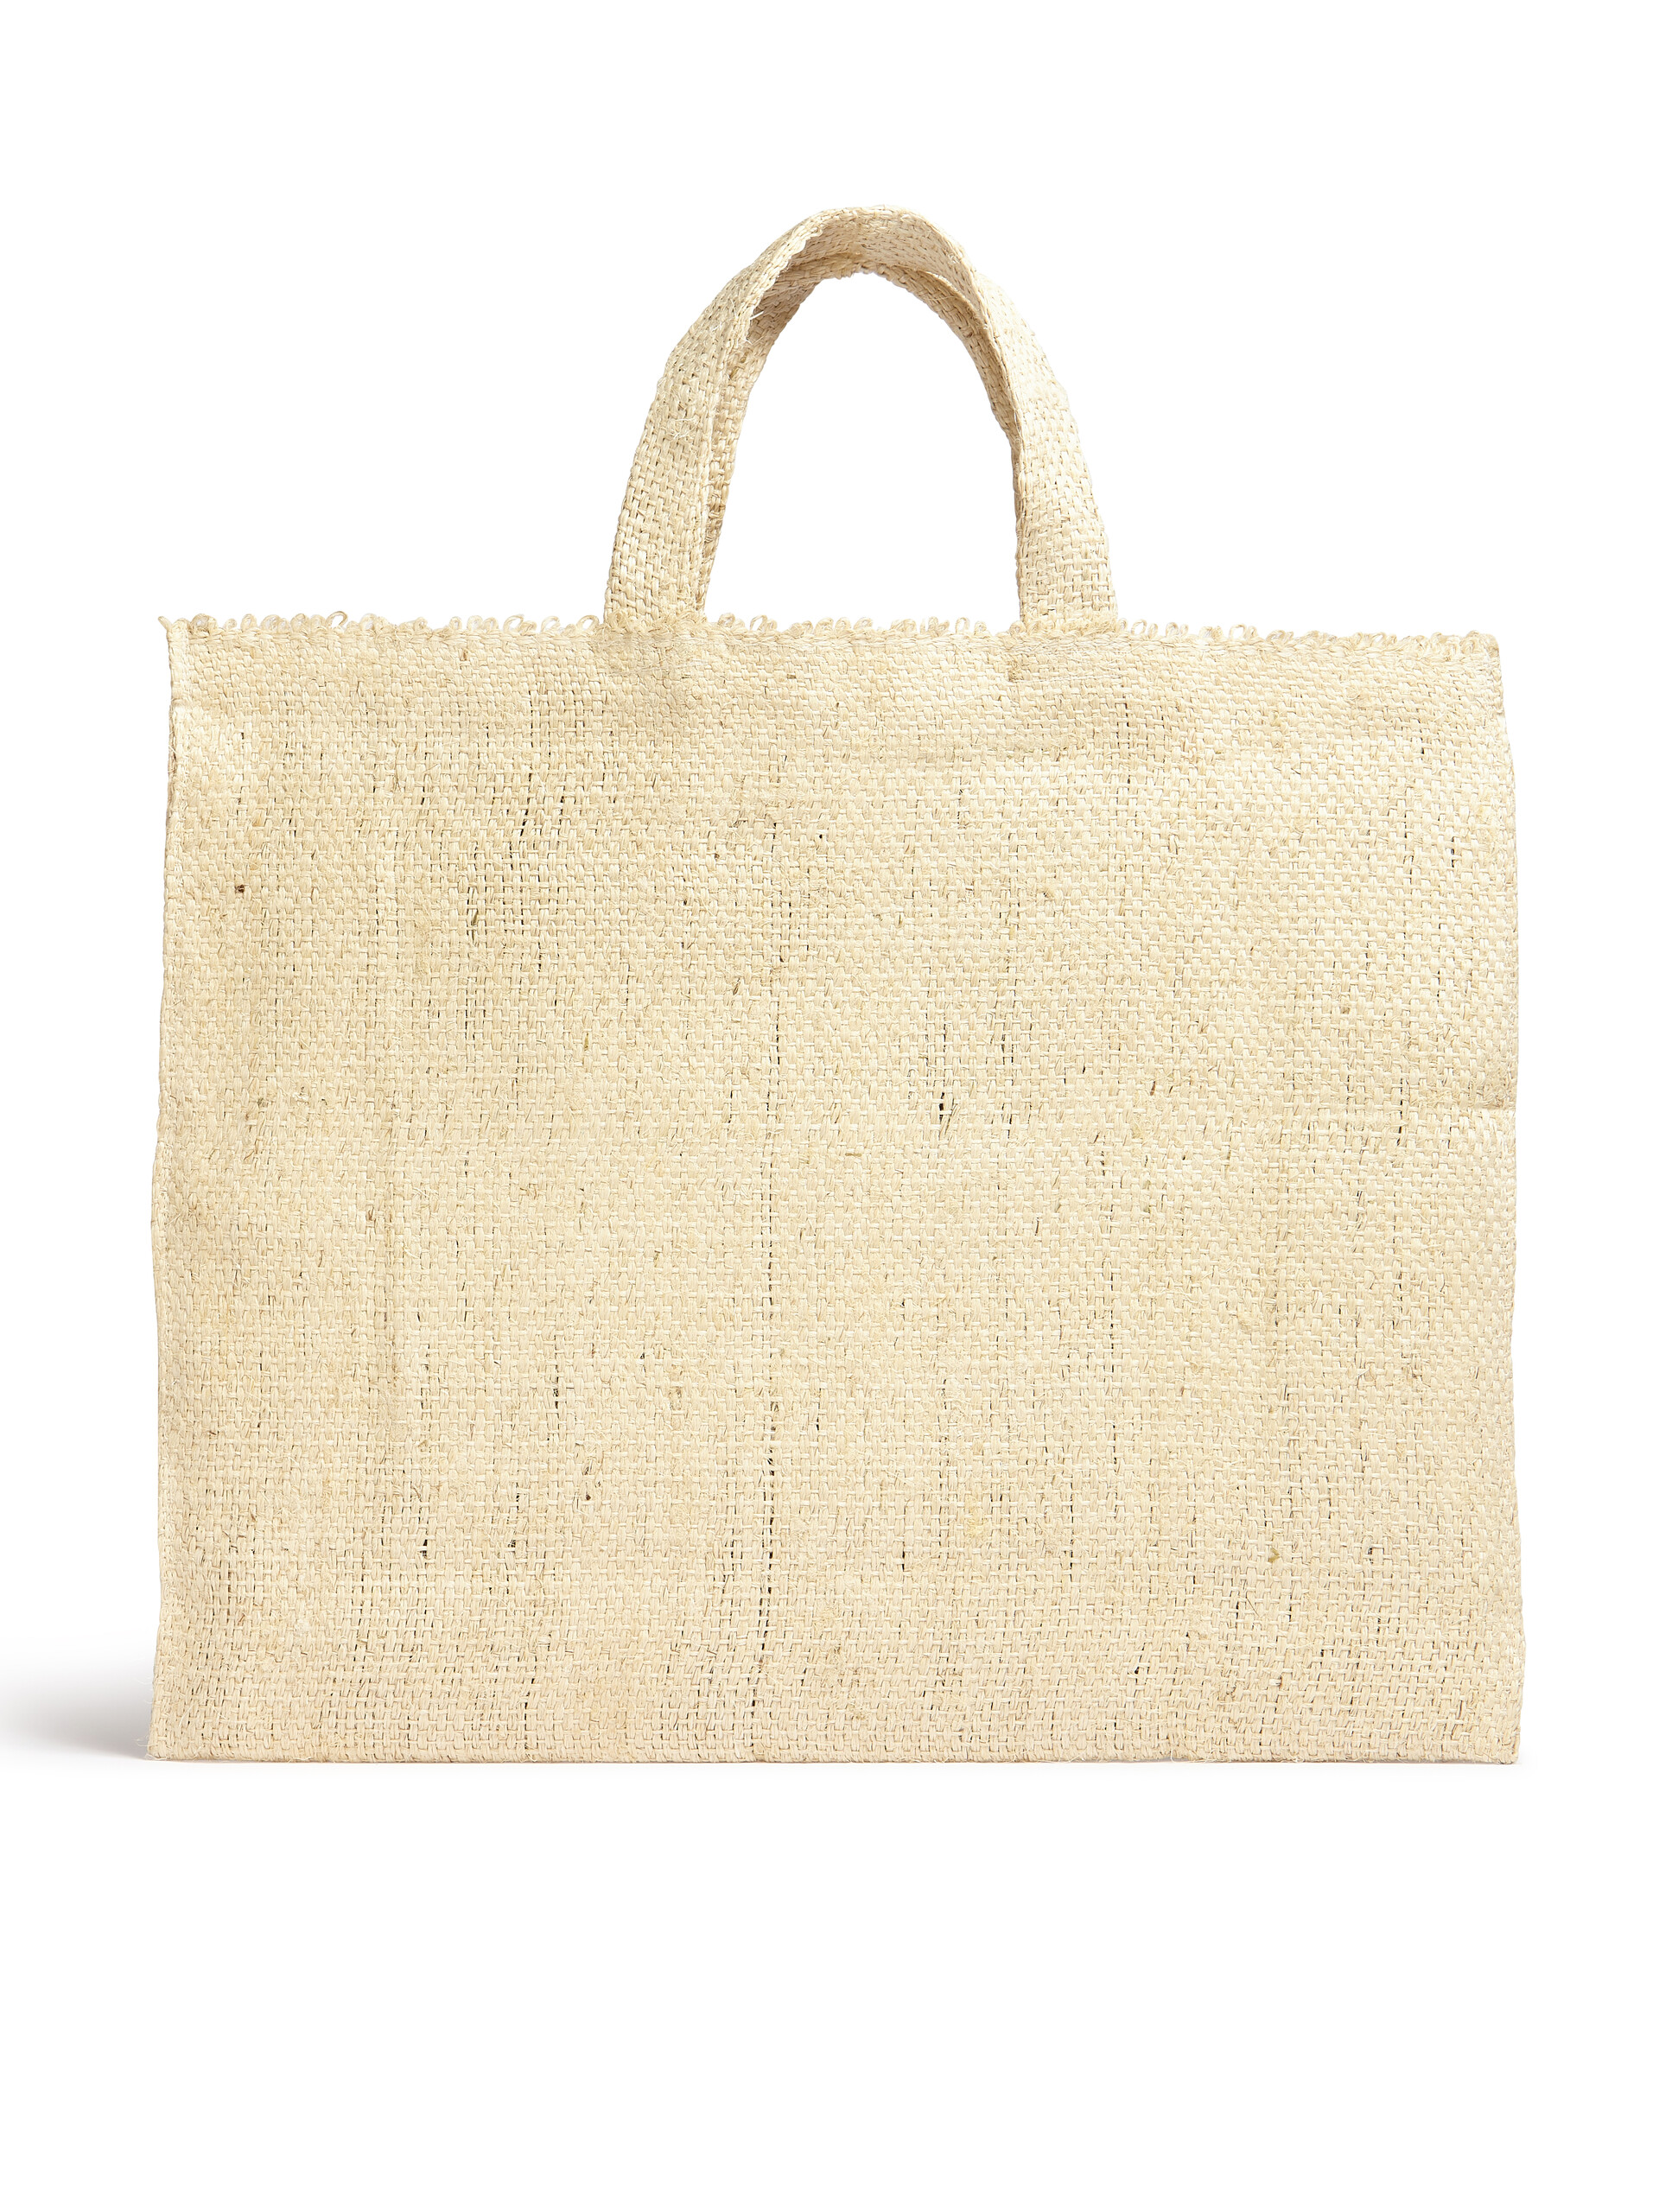 MARNI MARKET CANAPA large bag in black and orange natural fiber - Shopping Bags - Image 3